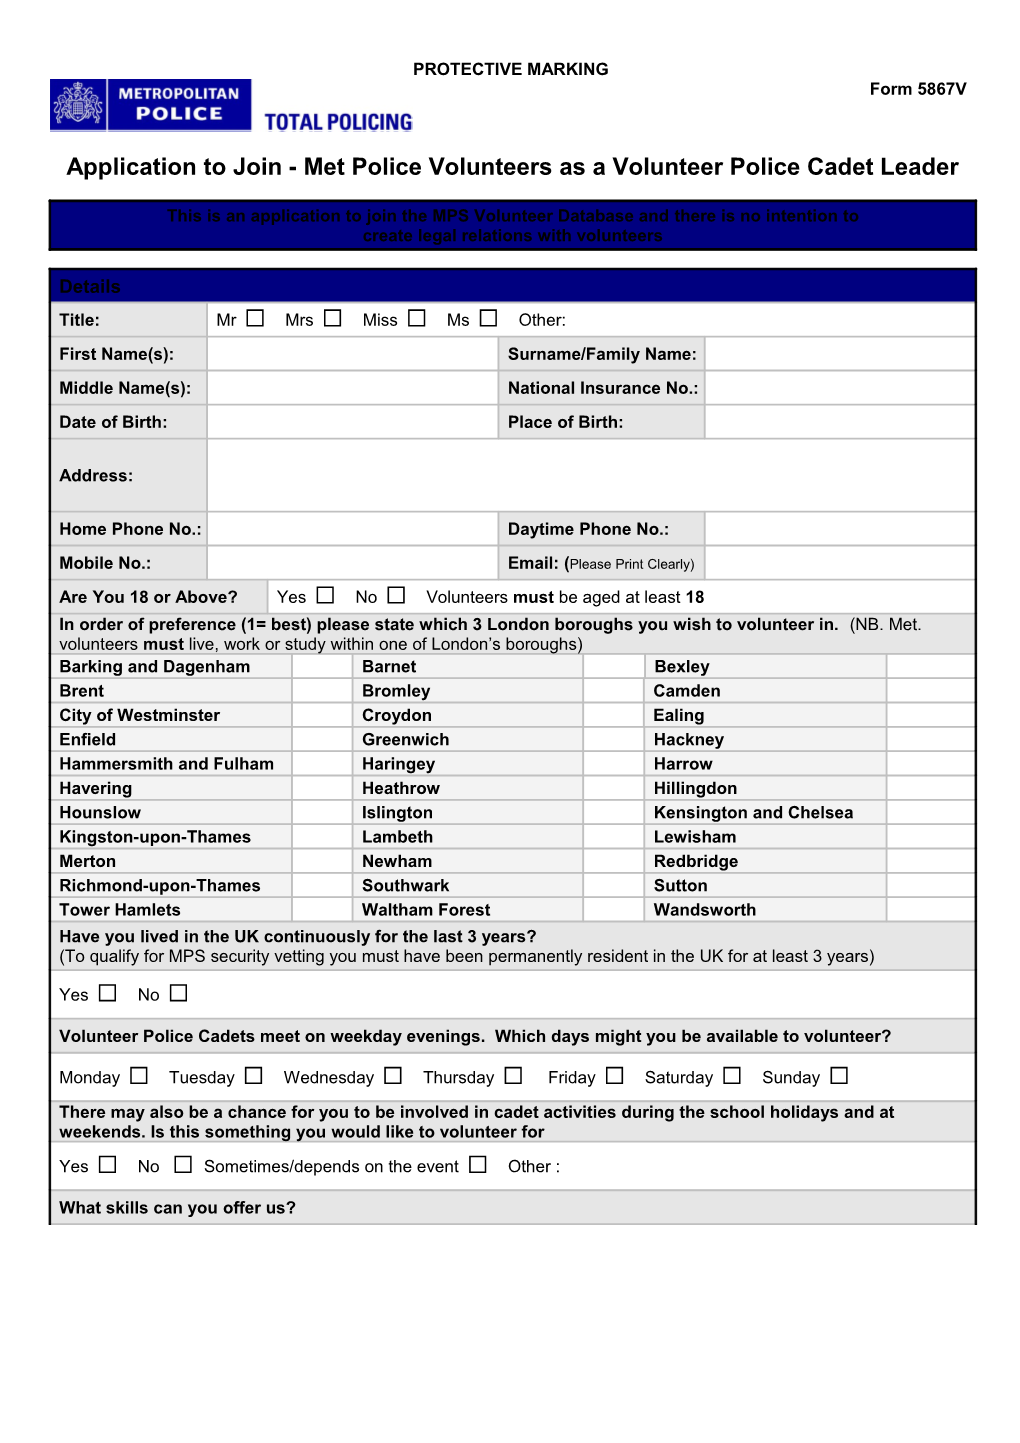 Form 5867V - Application to Join - Met Police Volunteers As Police Cadet Leader